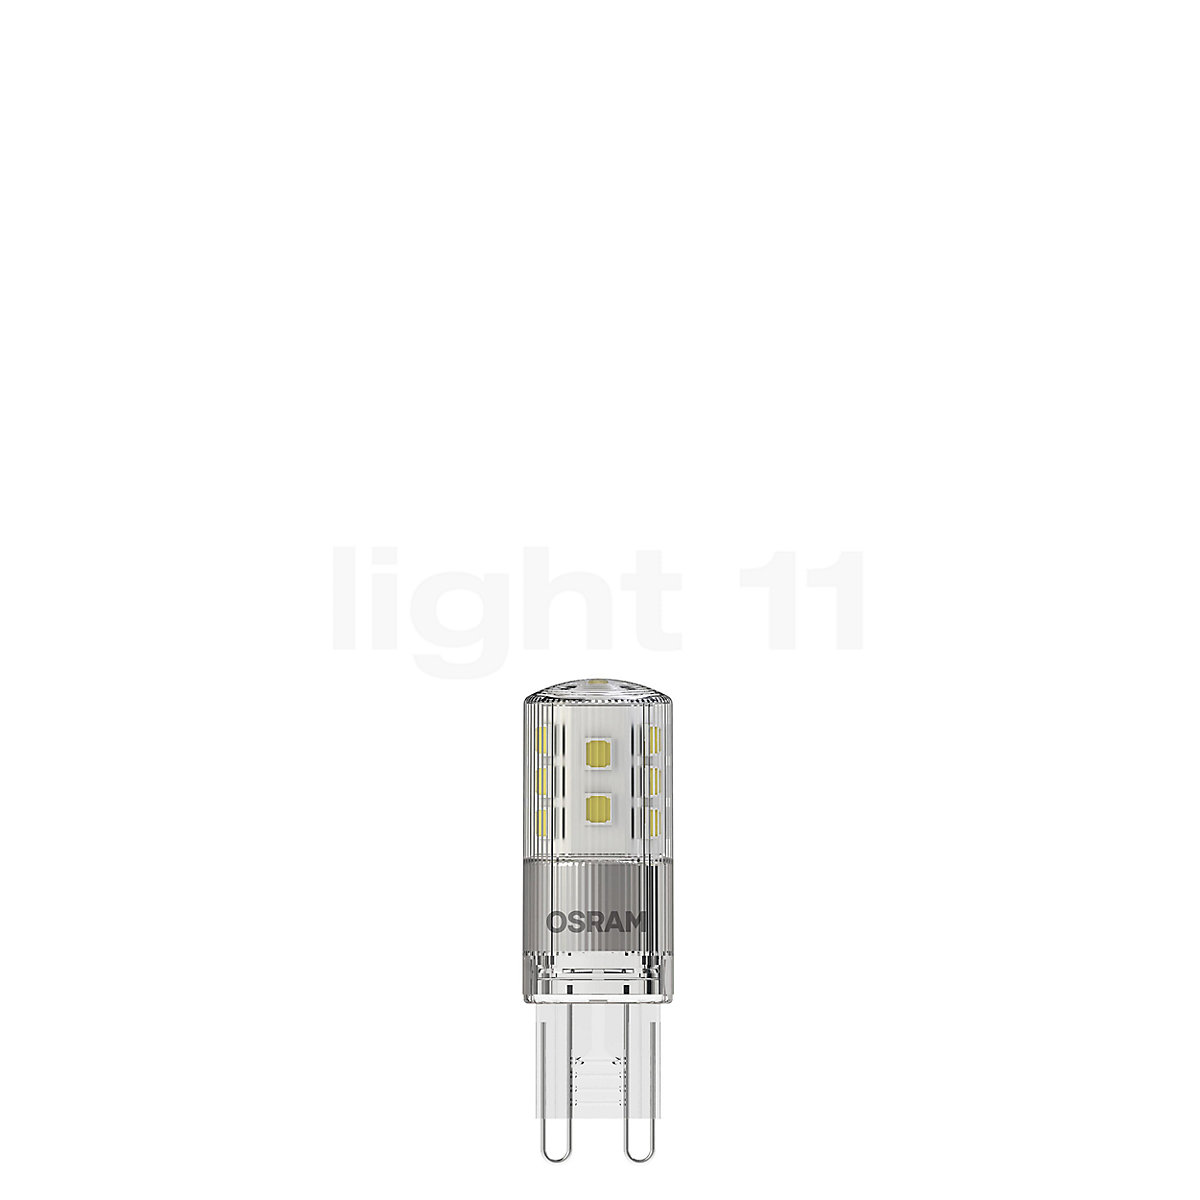 Buy Osram T20-dim 3W/c 827, G9 LED